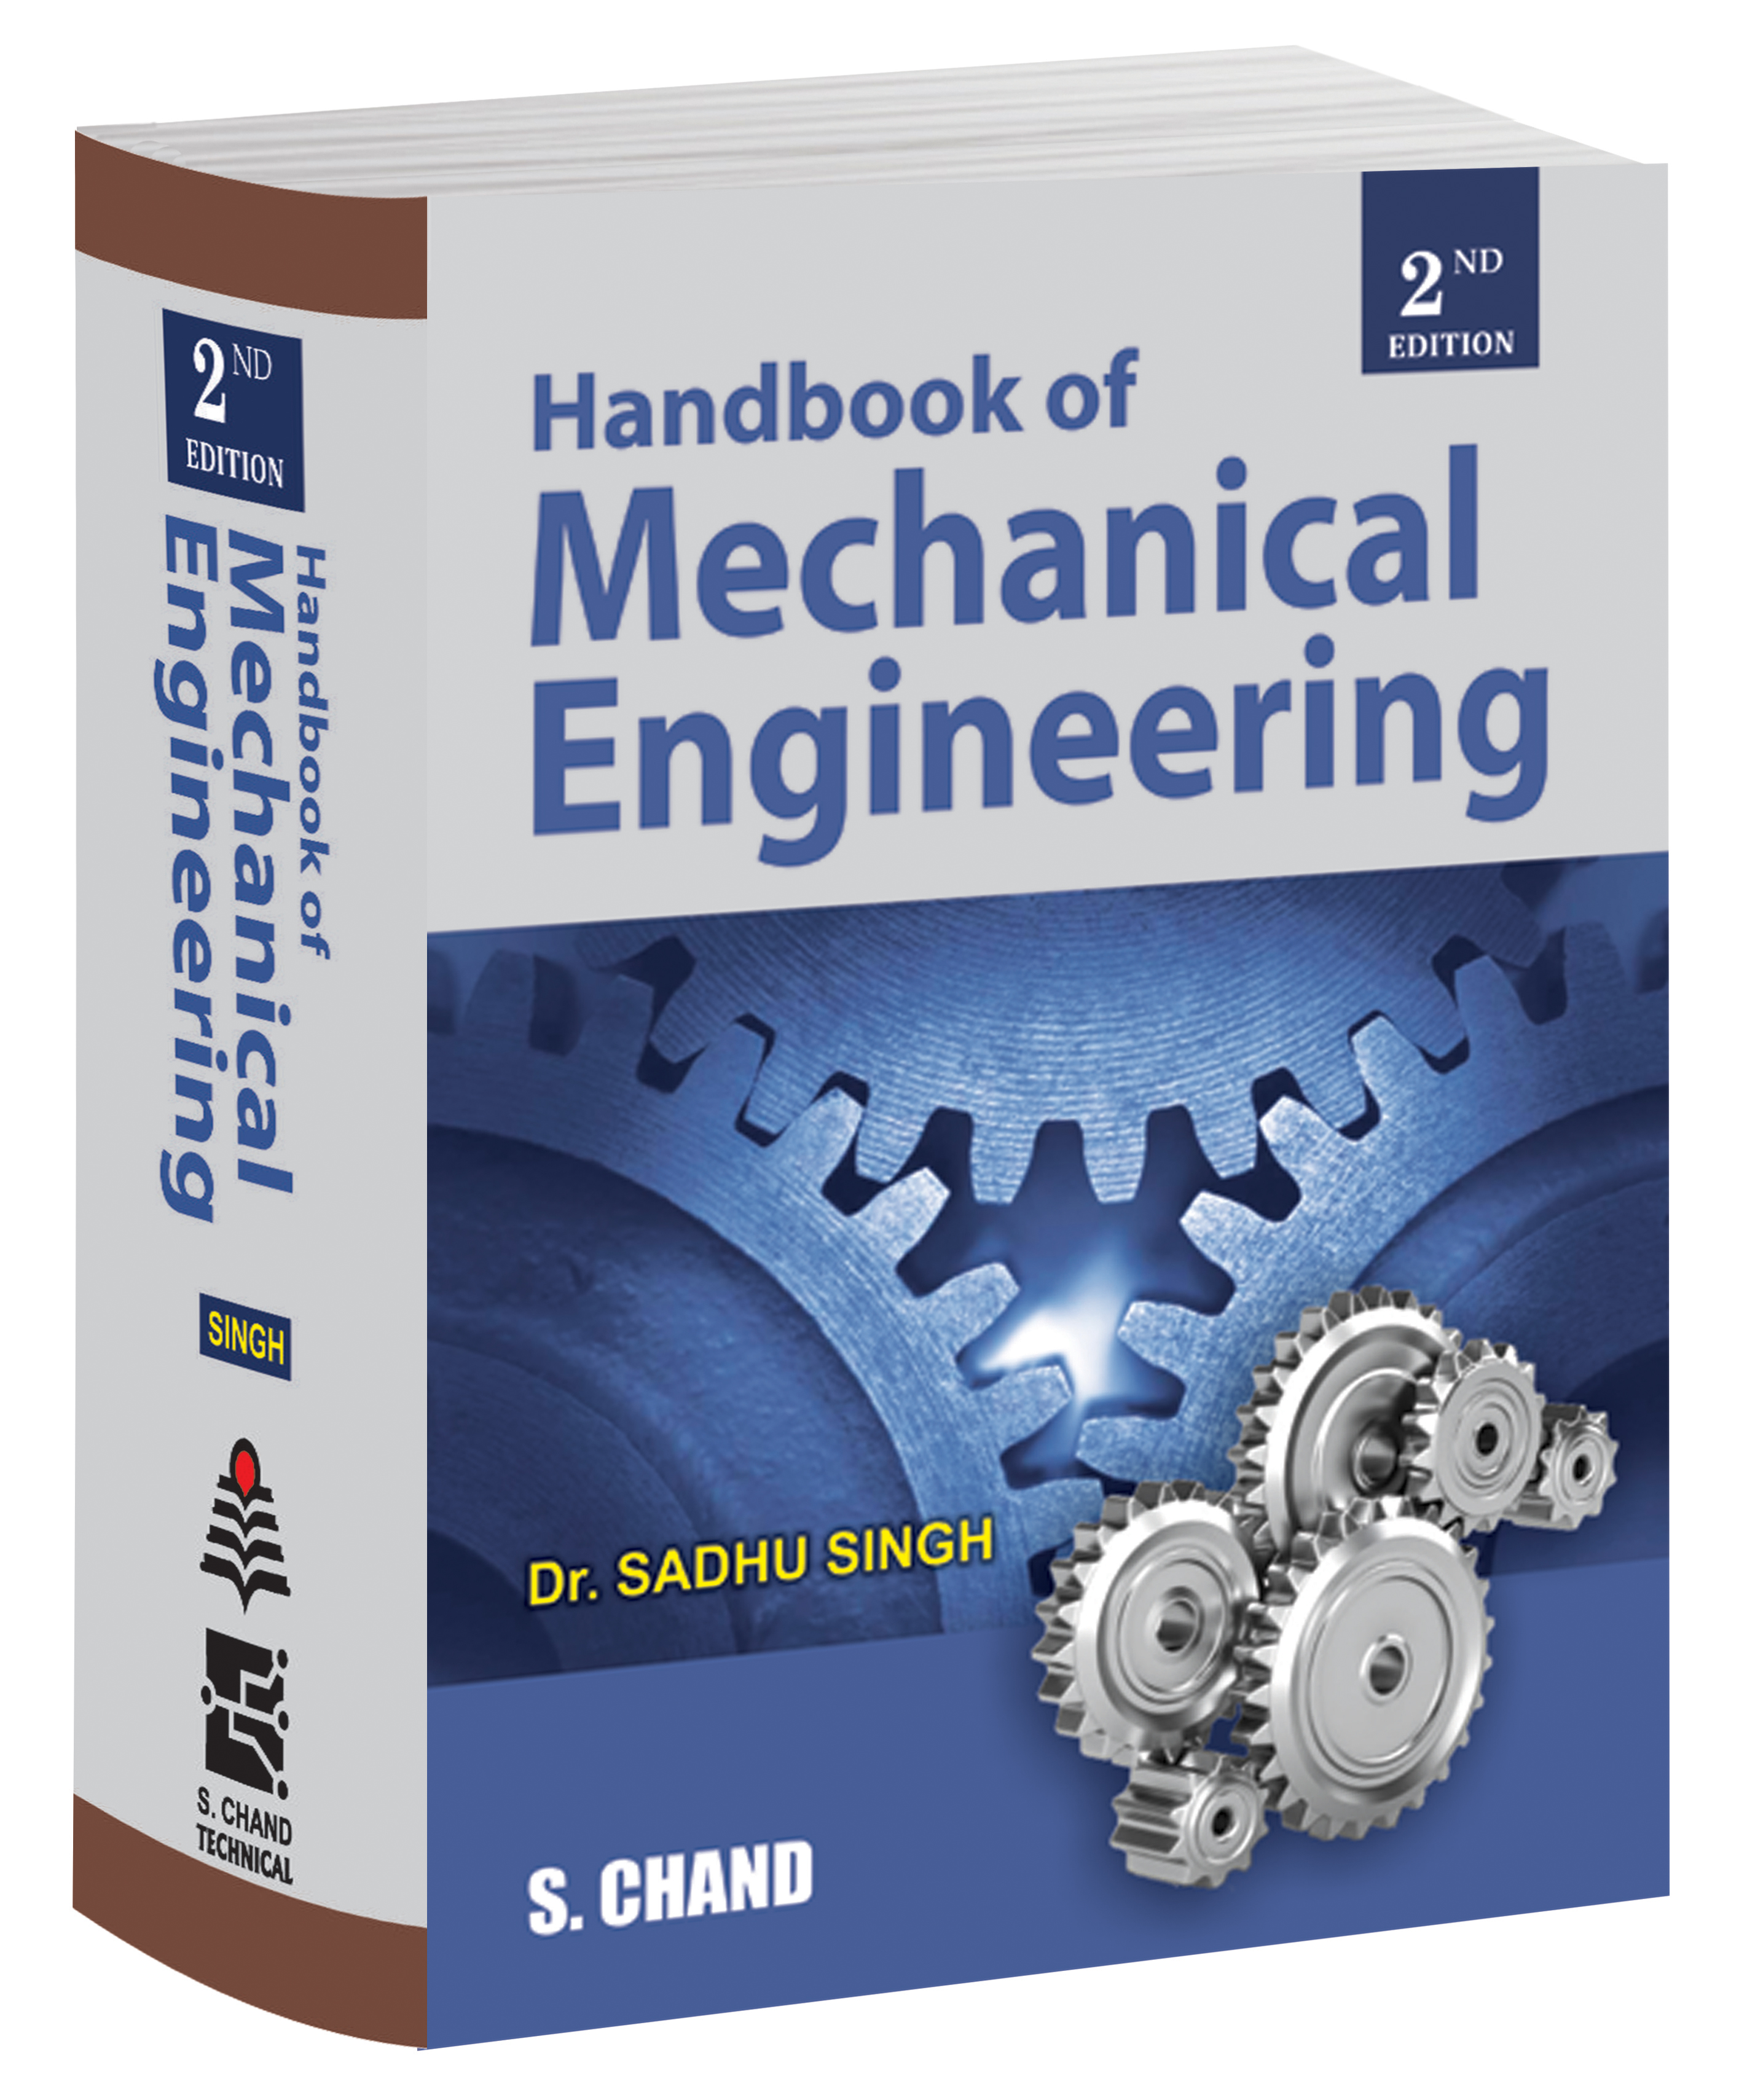 Handbook of Mechanical Engineering (Library Editions)